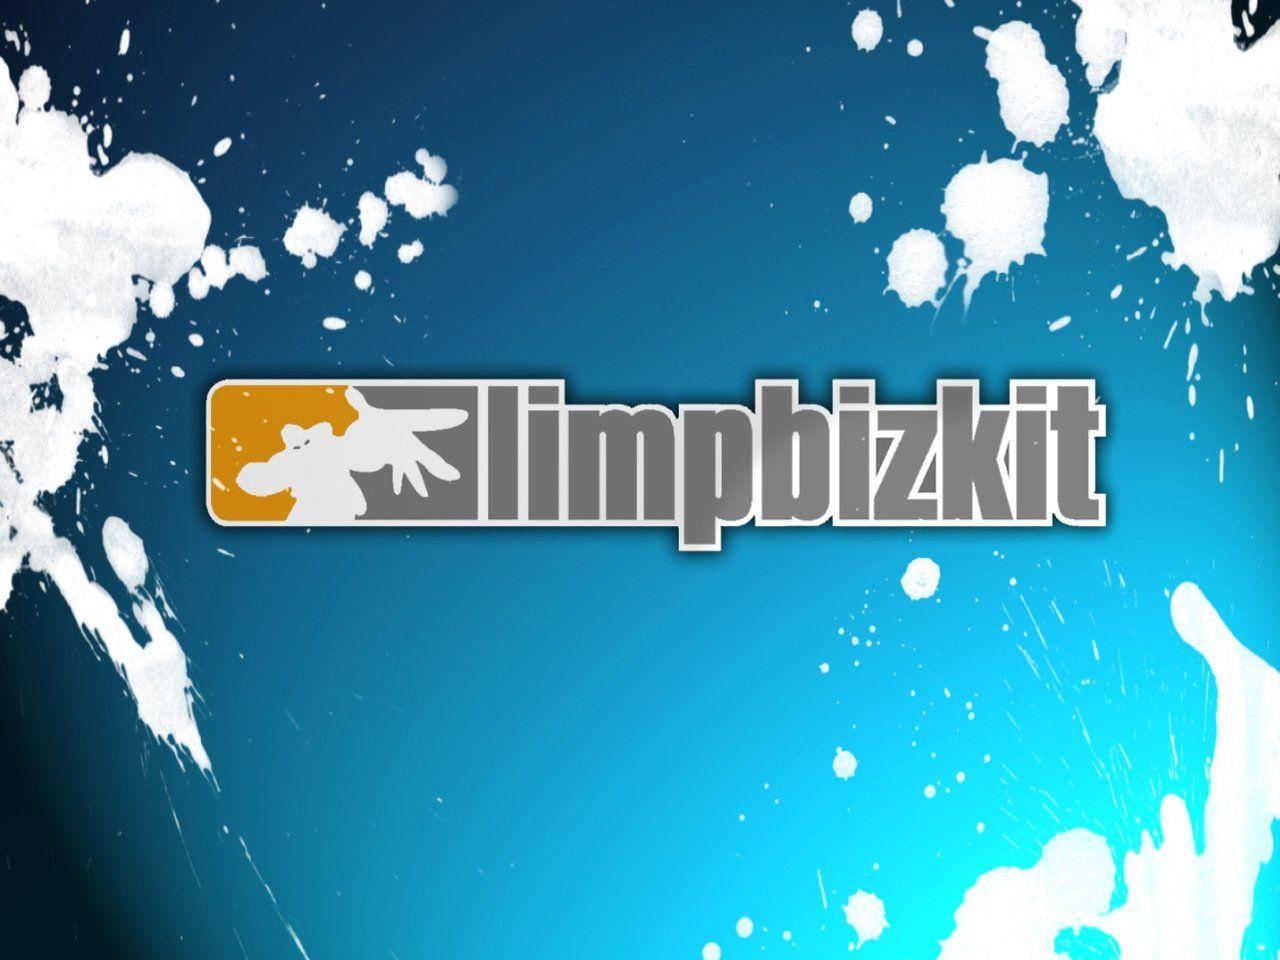 Limp Bizkit Wallpaper. Music Wallpaper Gallery. PC Desktop